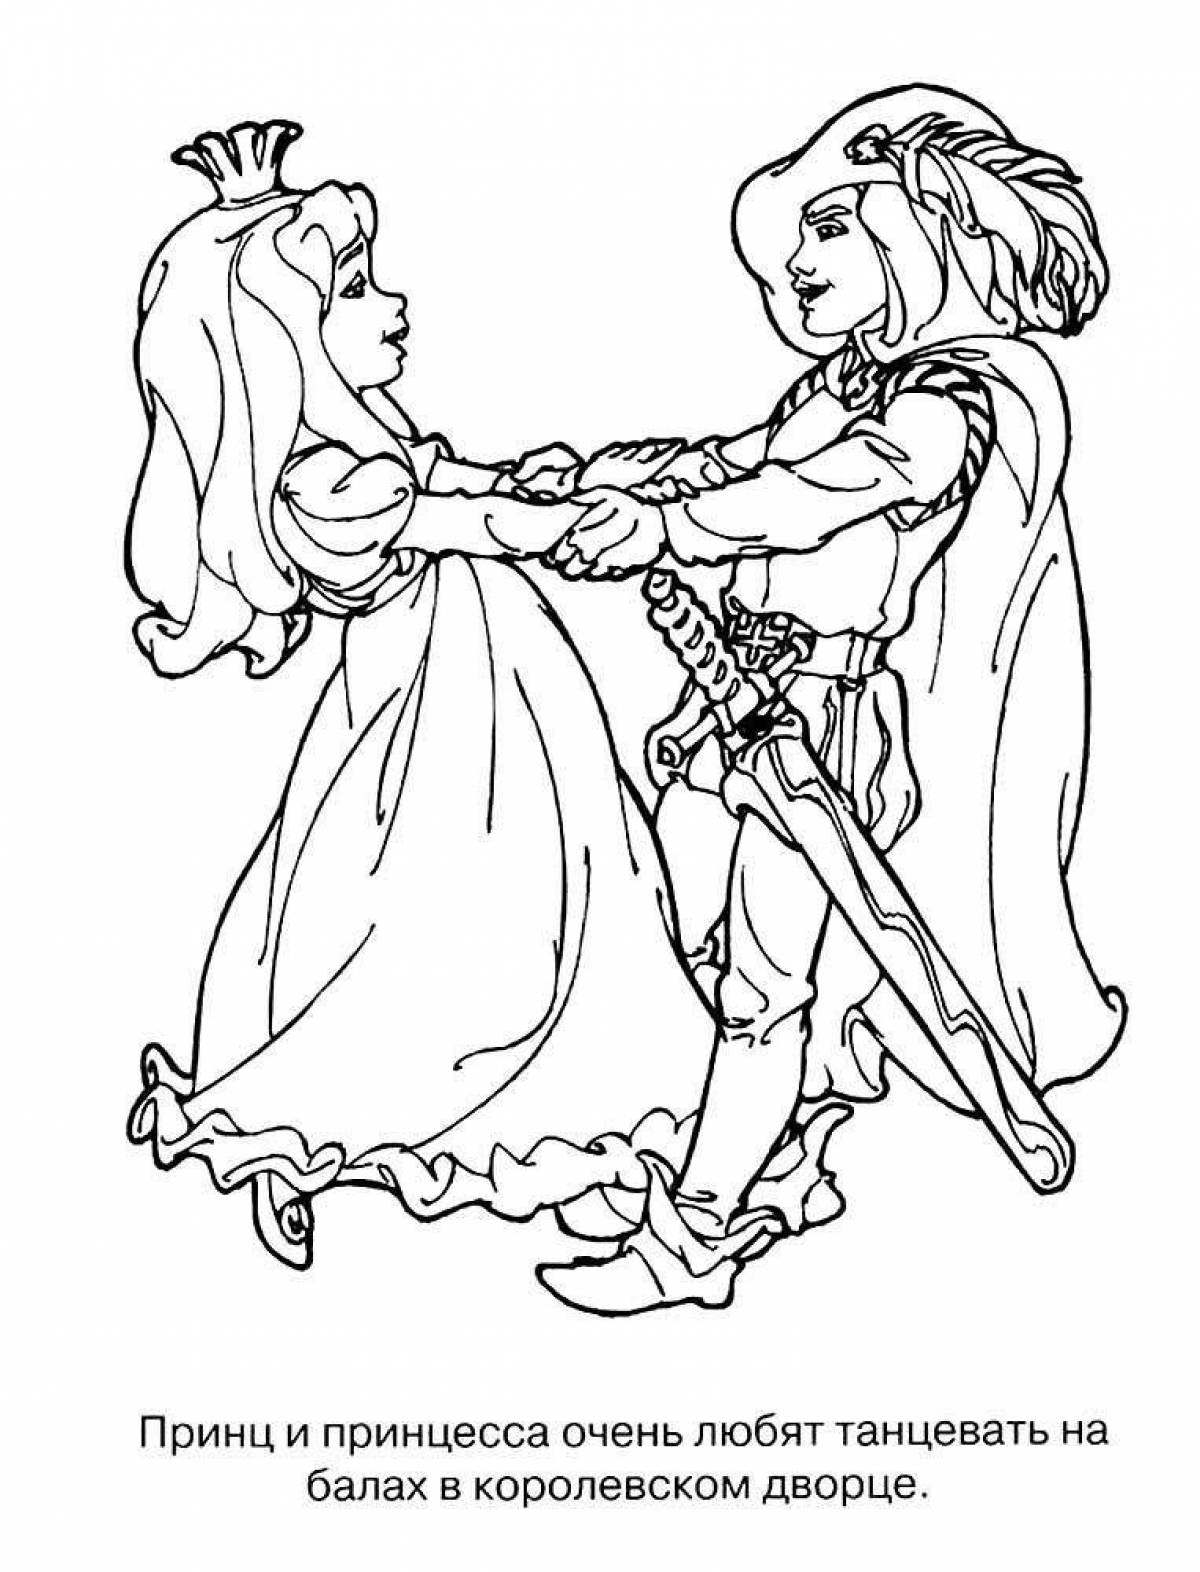 Brilliant prince and princess coloring book